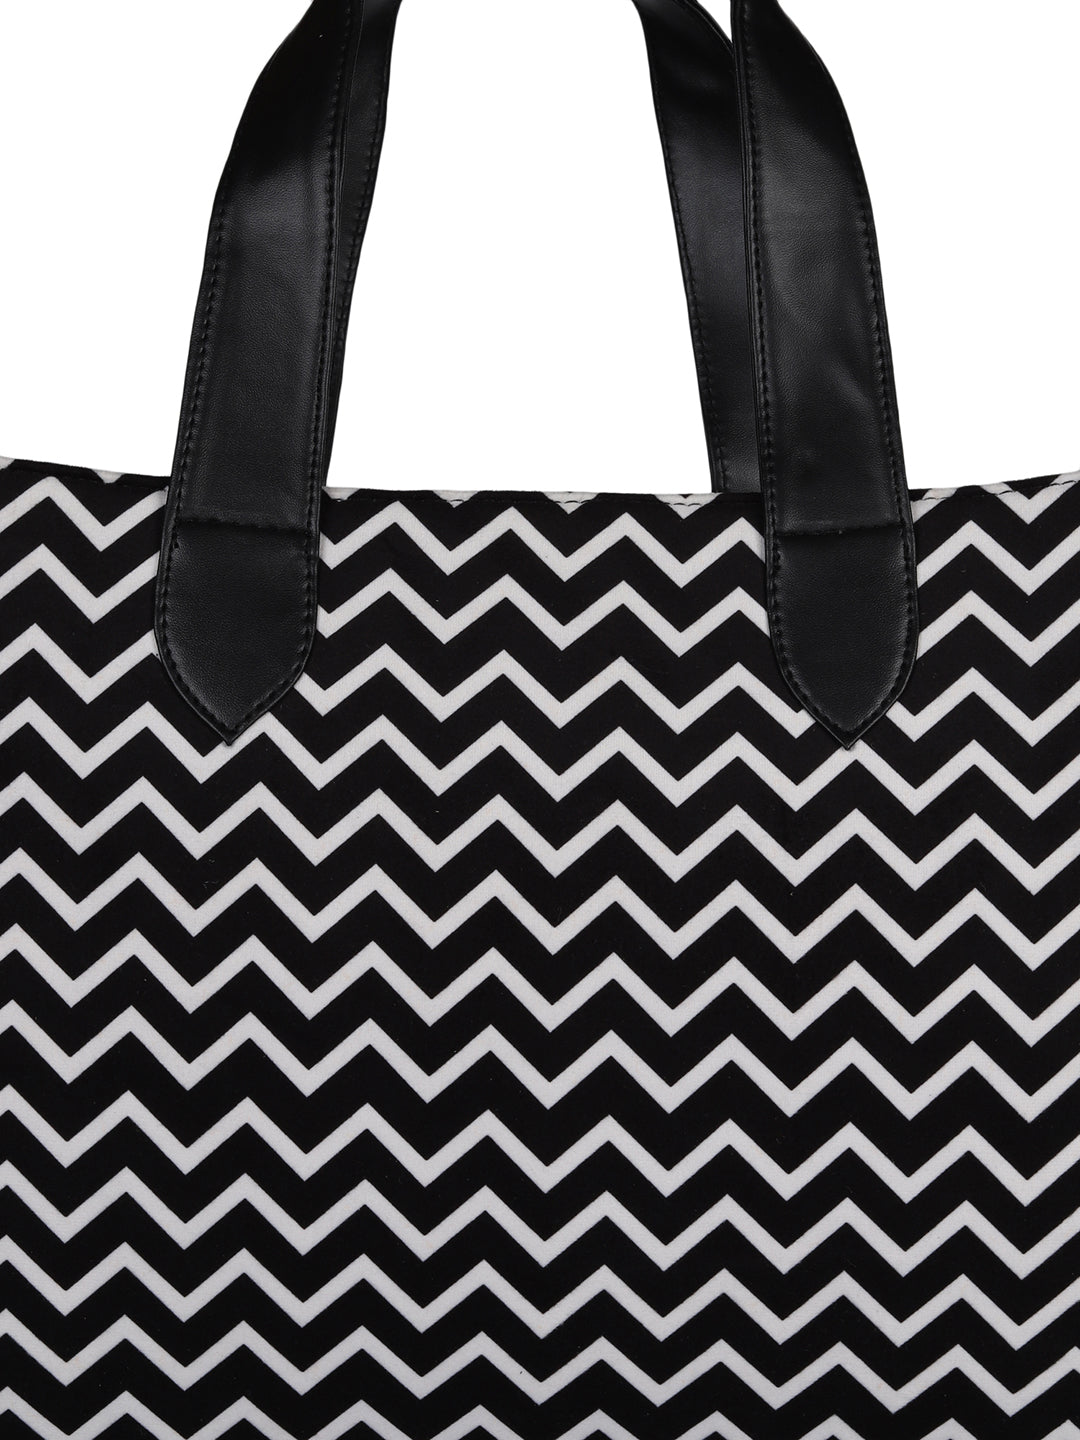 MINI WESST Black And White Textured Tote Bag(MWTB094ZIG)